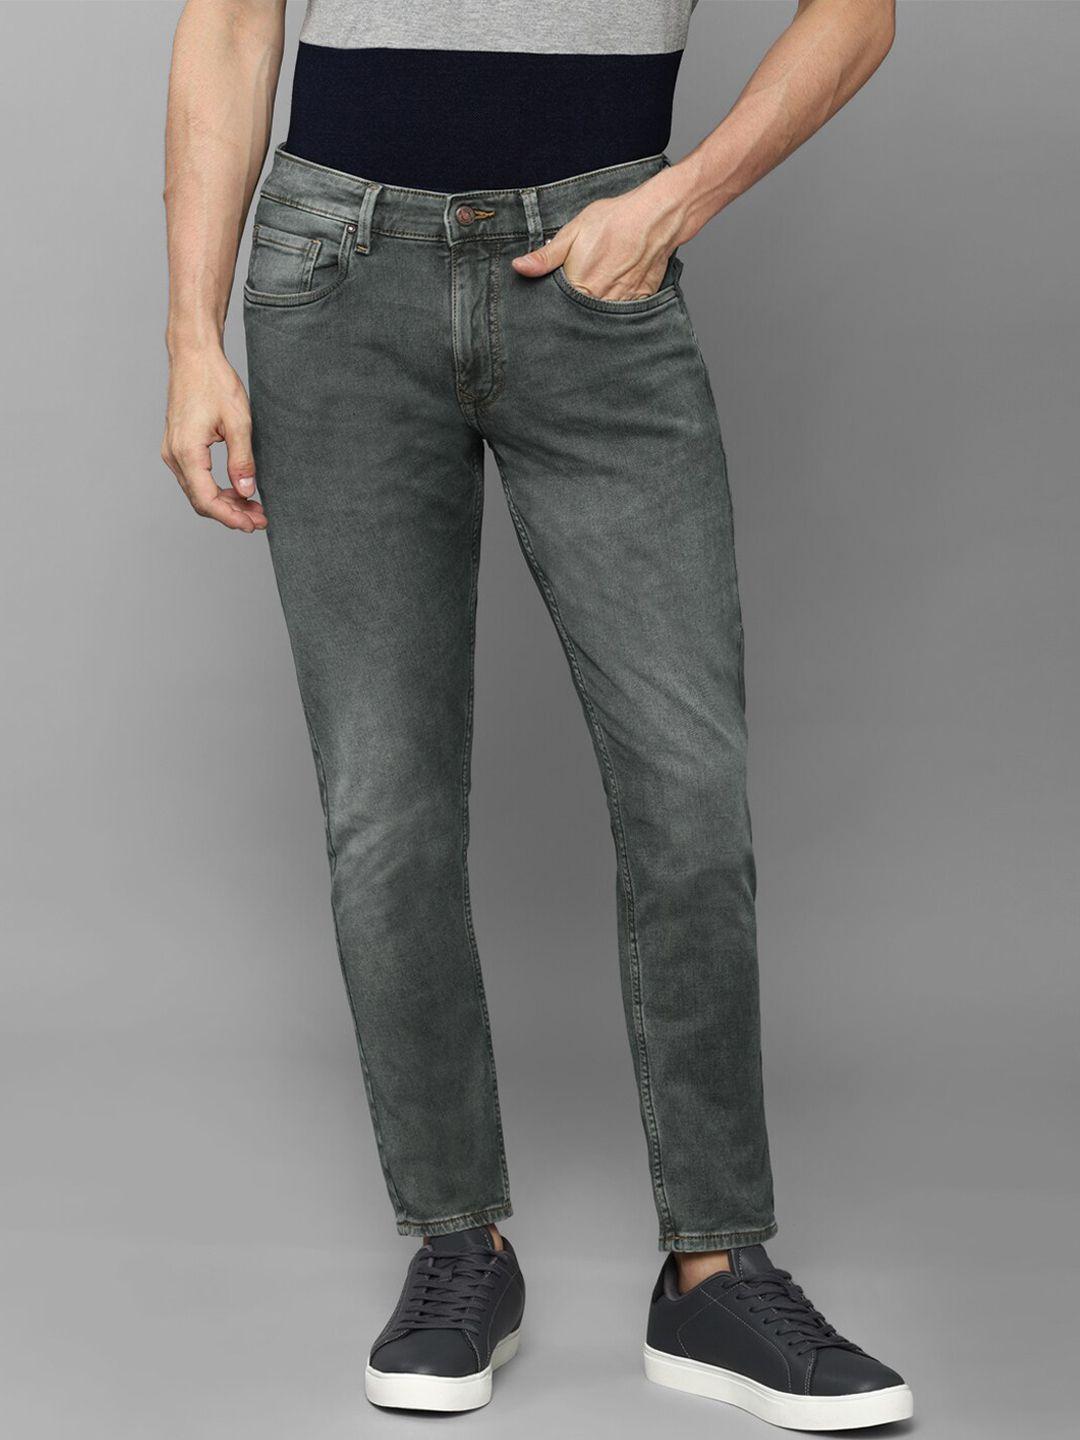 louis-philippe-jeans-men-grey-slim-fit-light-fade-jeans